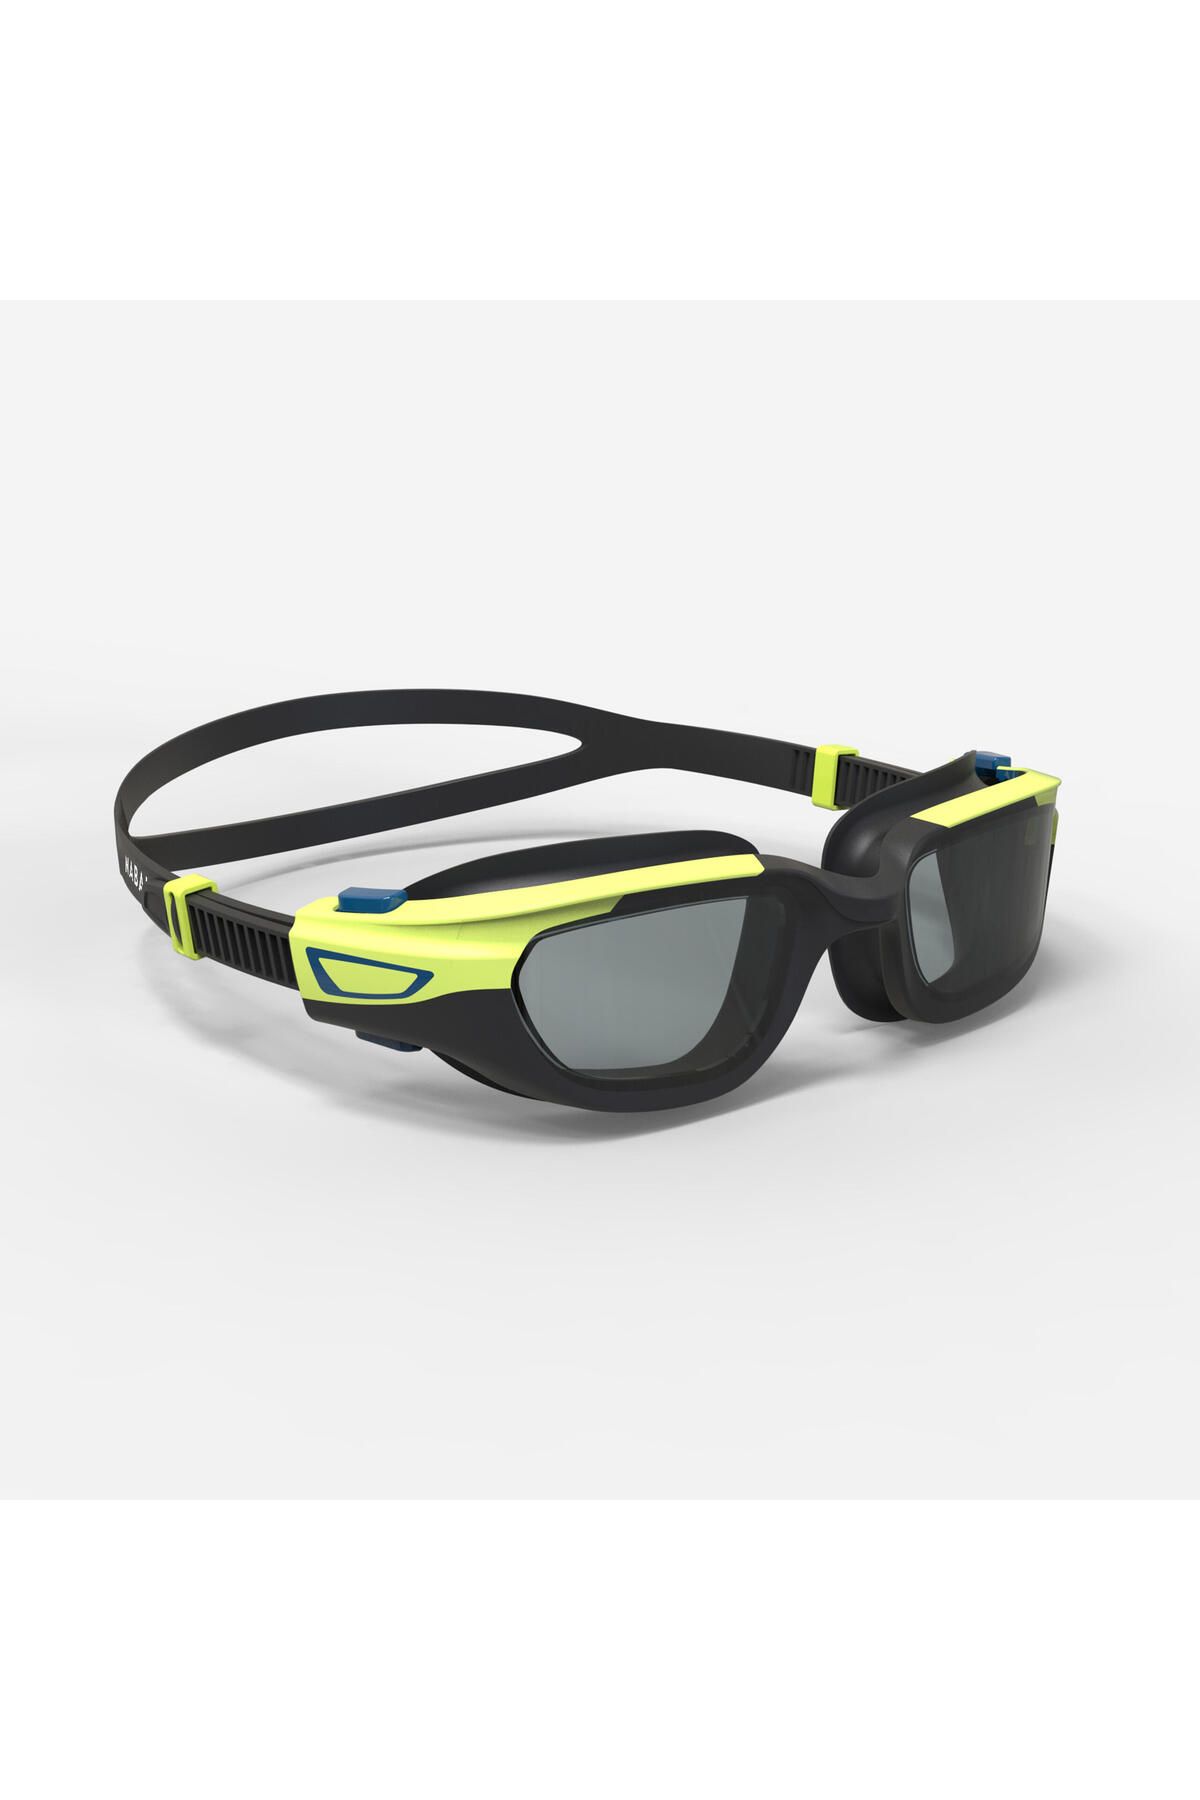 Decathlon Yüzücü Gözlüğü - Küçük Boy - Siyah/Sarı - Füme Camlar - Spirit